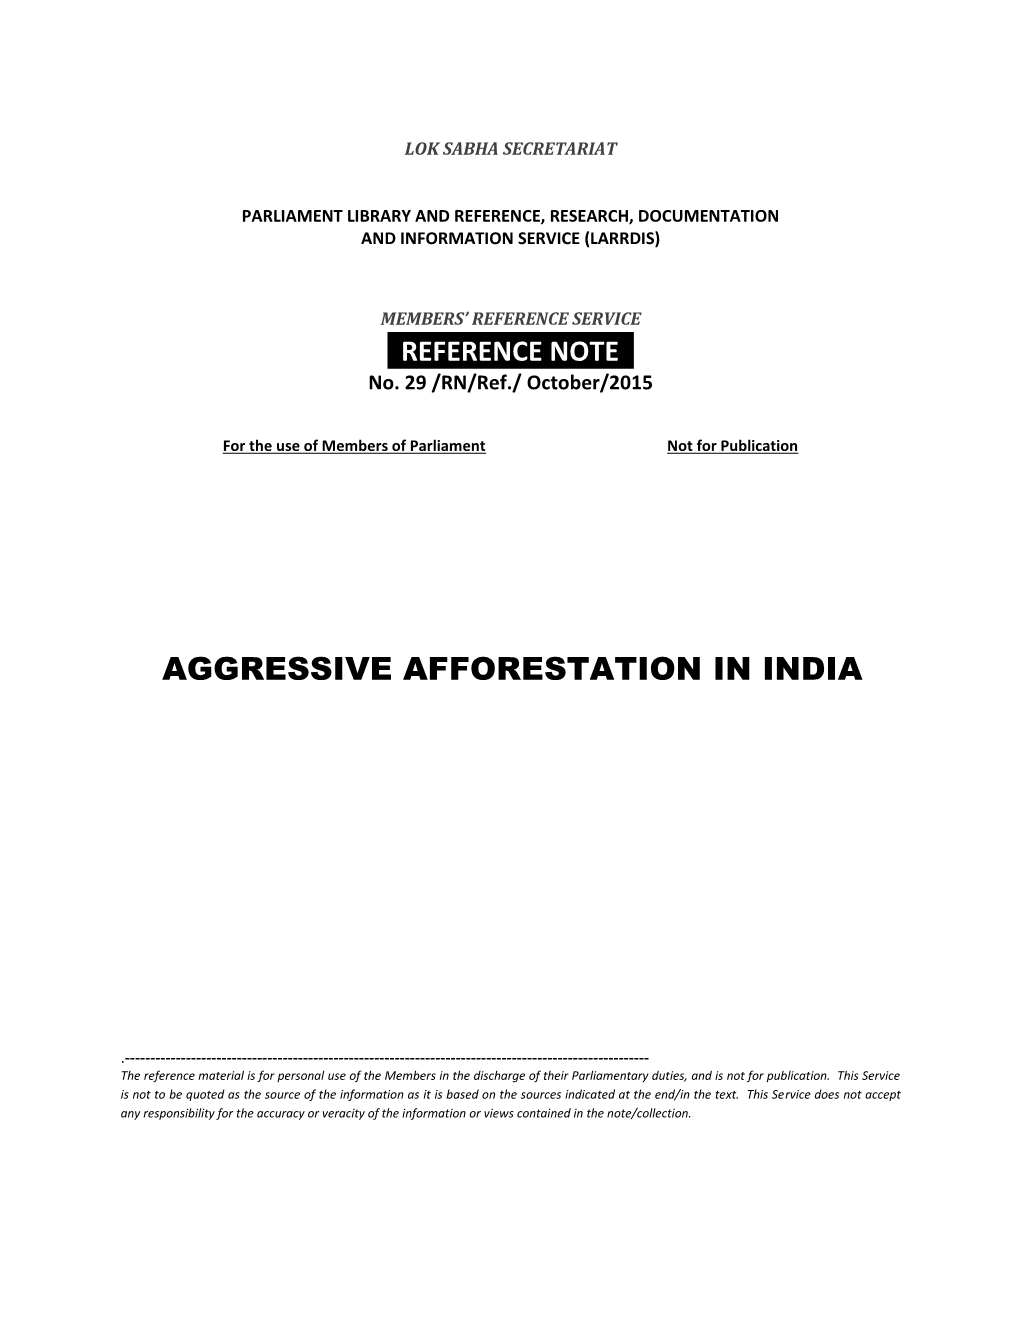 Aggressive Afforestation in India